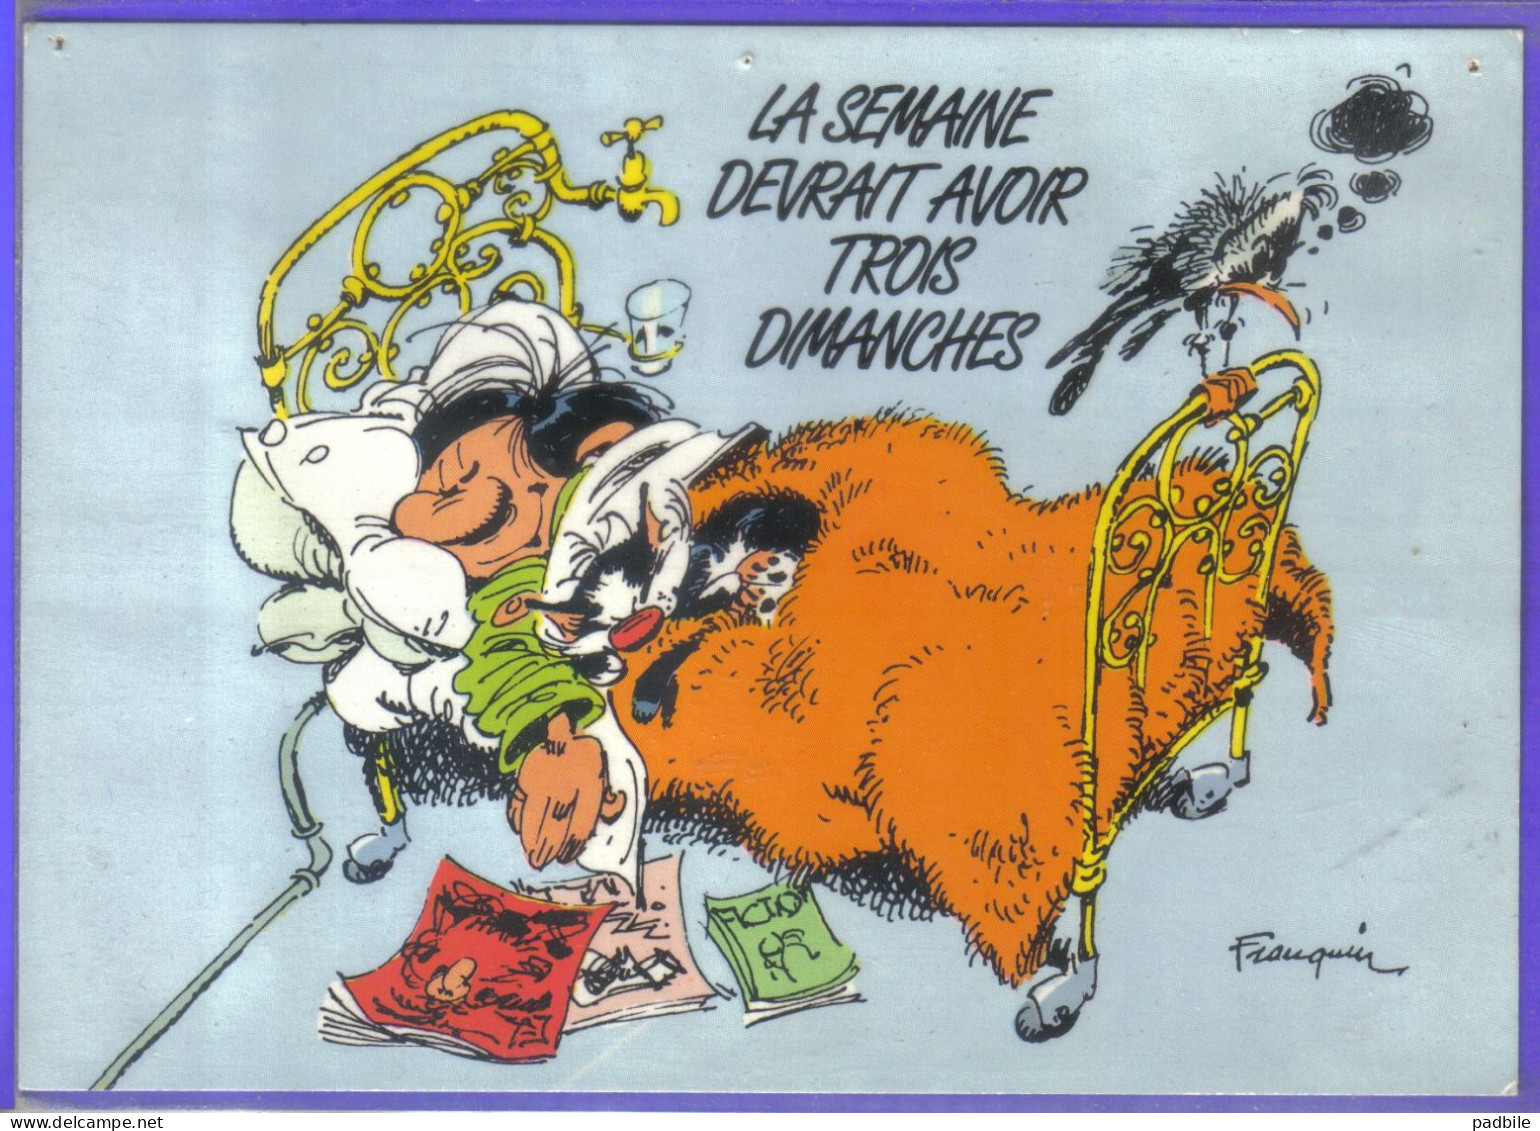 Carte Postale Bande Dessinée Franquin  Gaston Lagaffe  N°31  Très Beau Plan - Comicfiguren